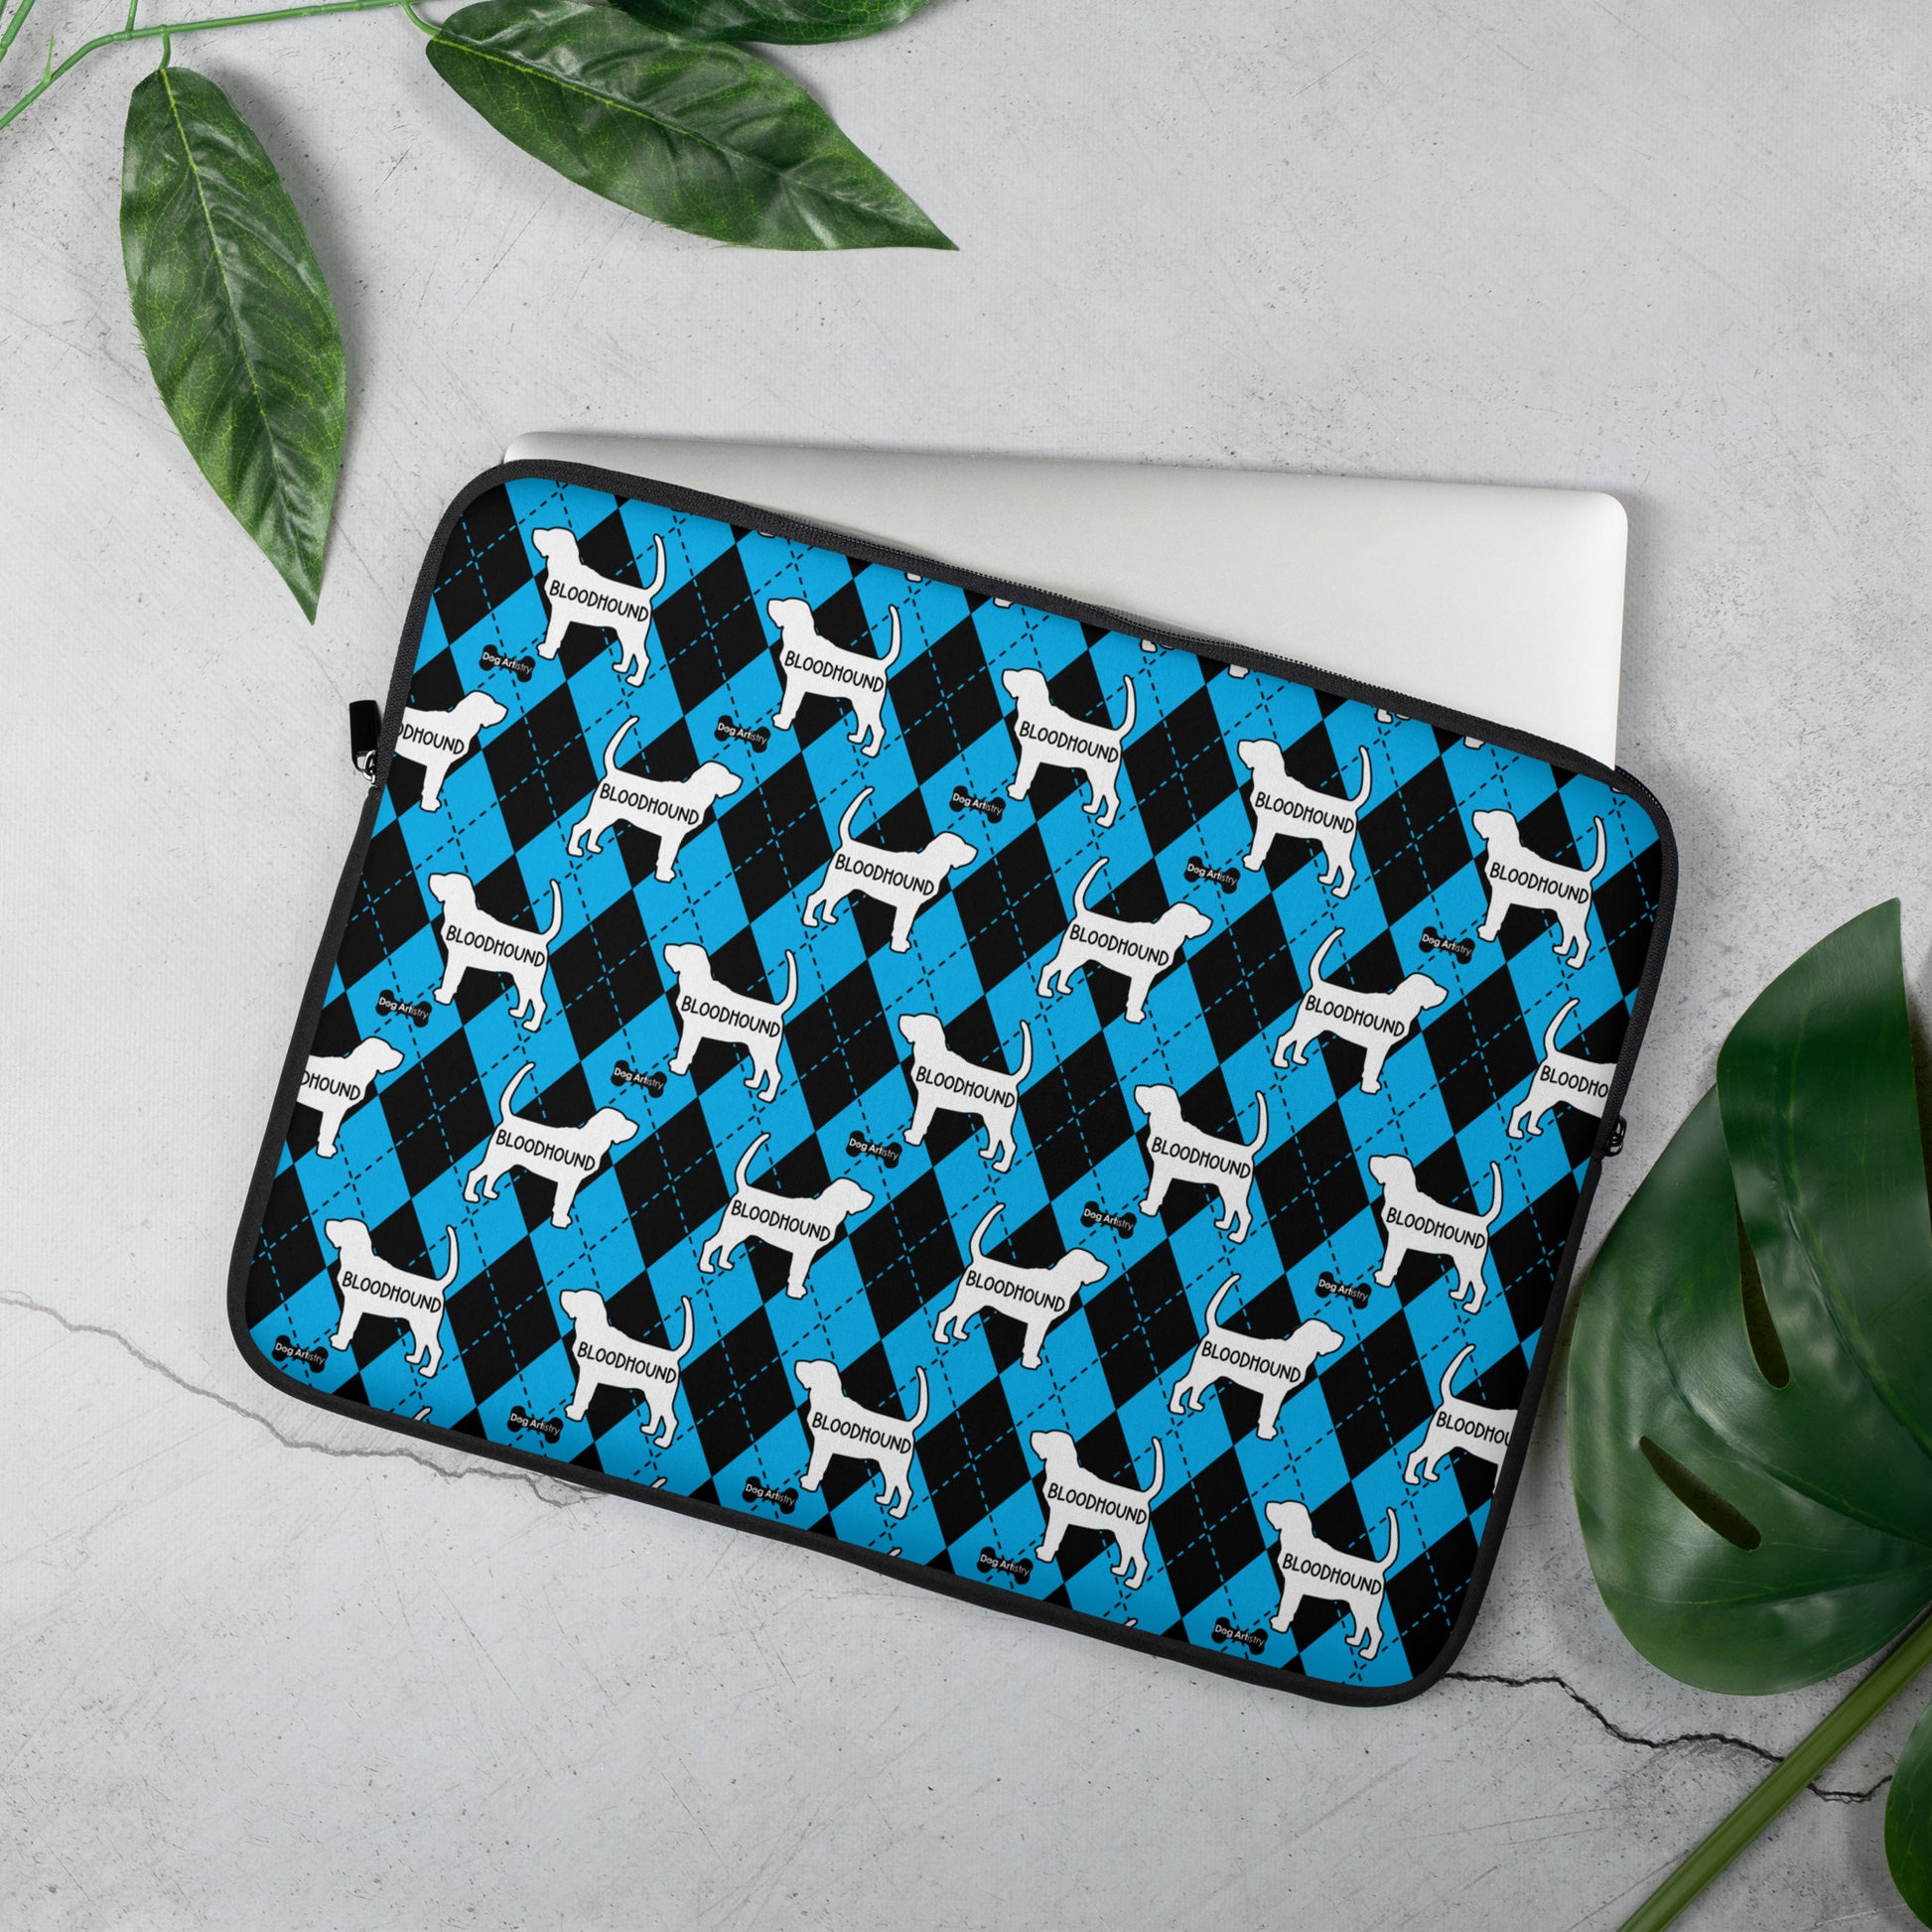 Bloodhound blue and black argyle laptop sleeve by Dog Artistry